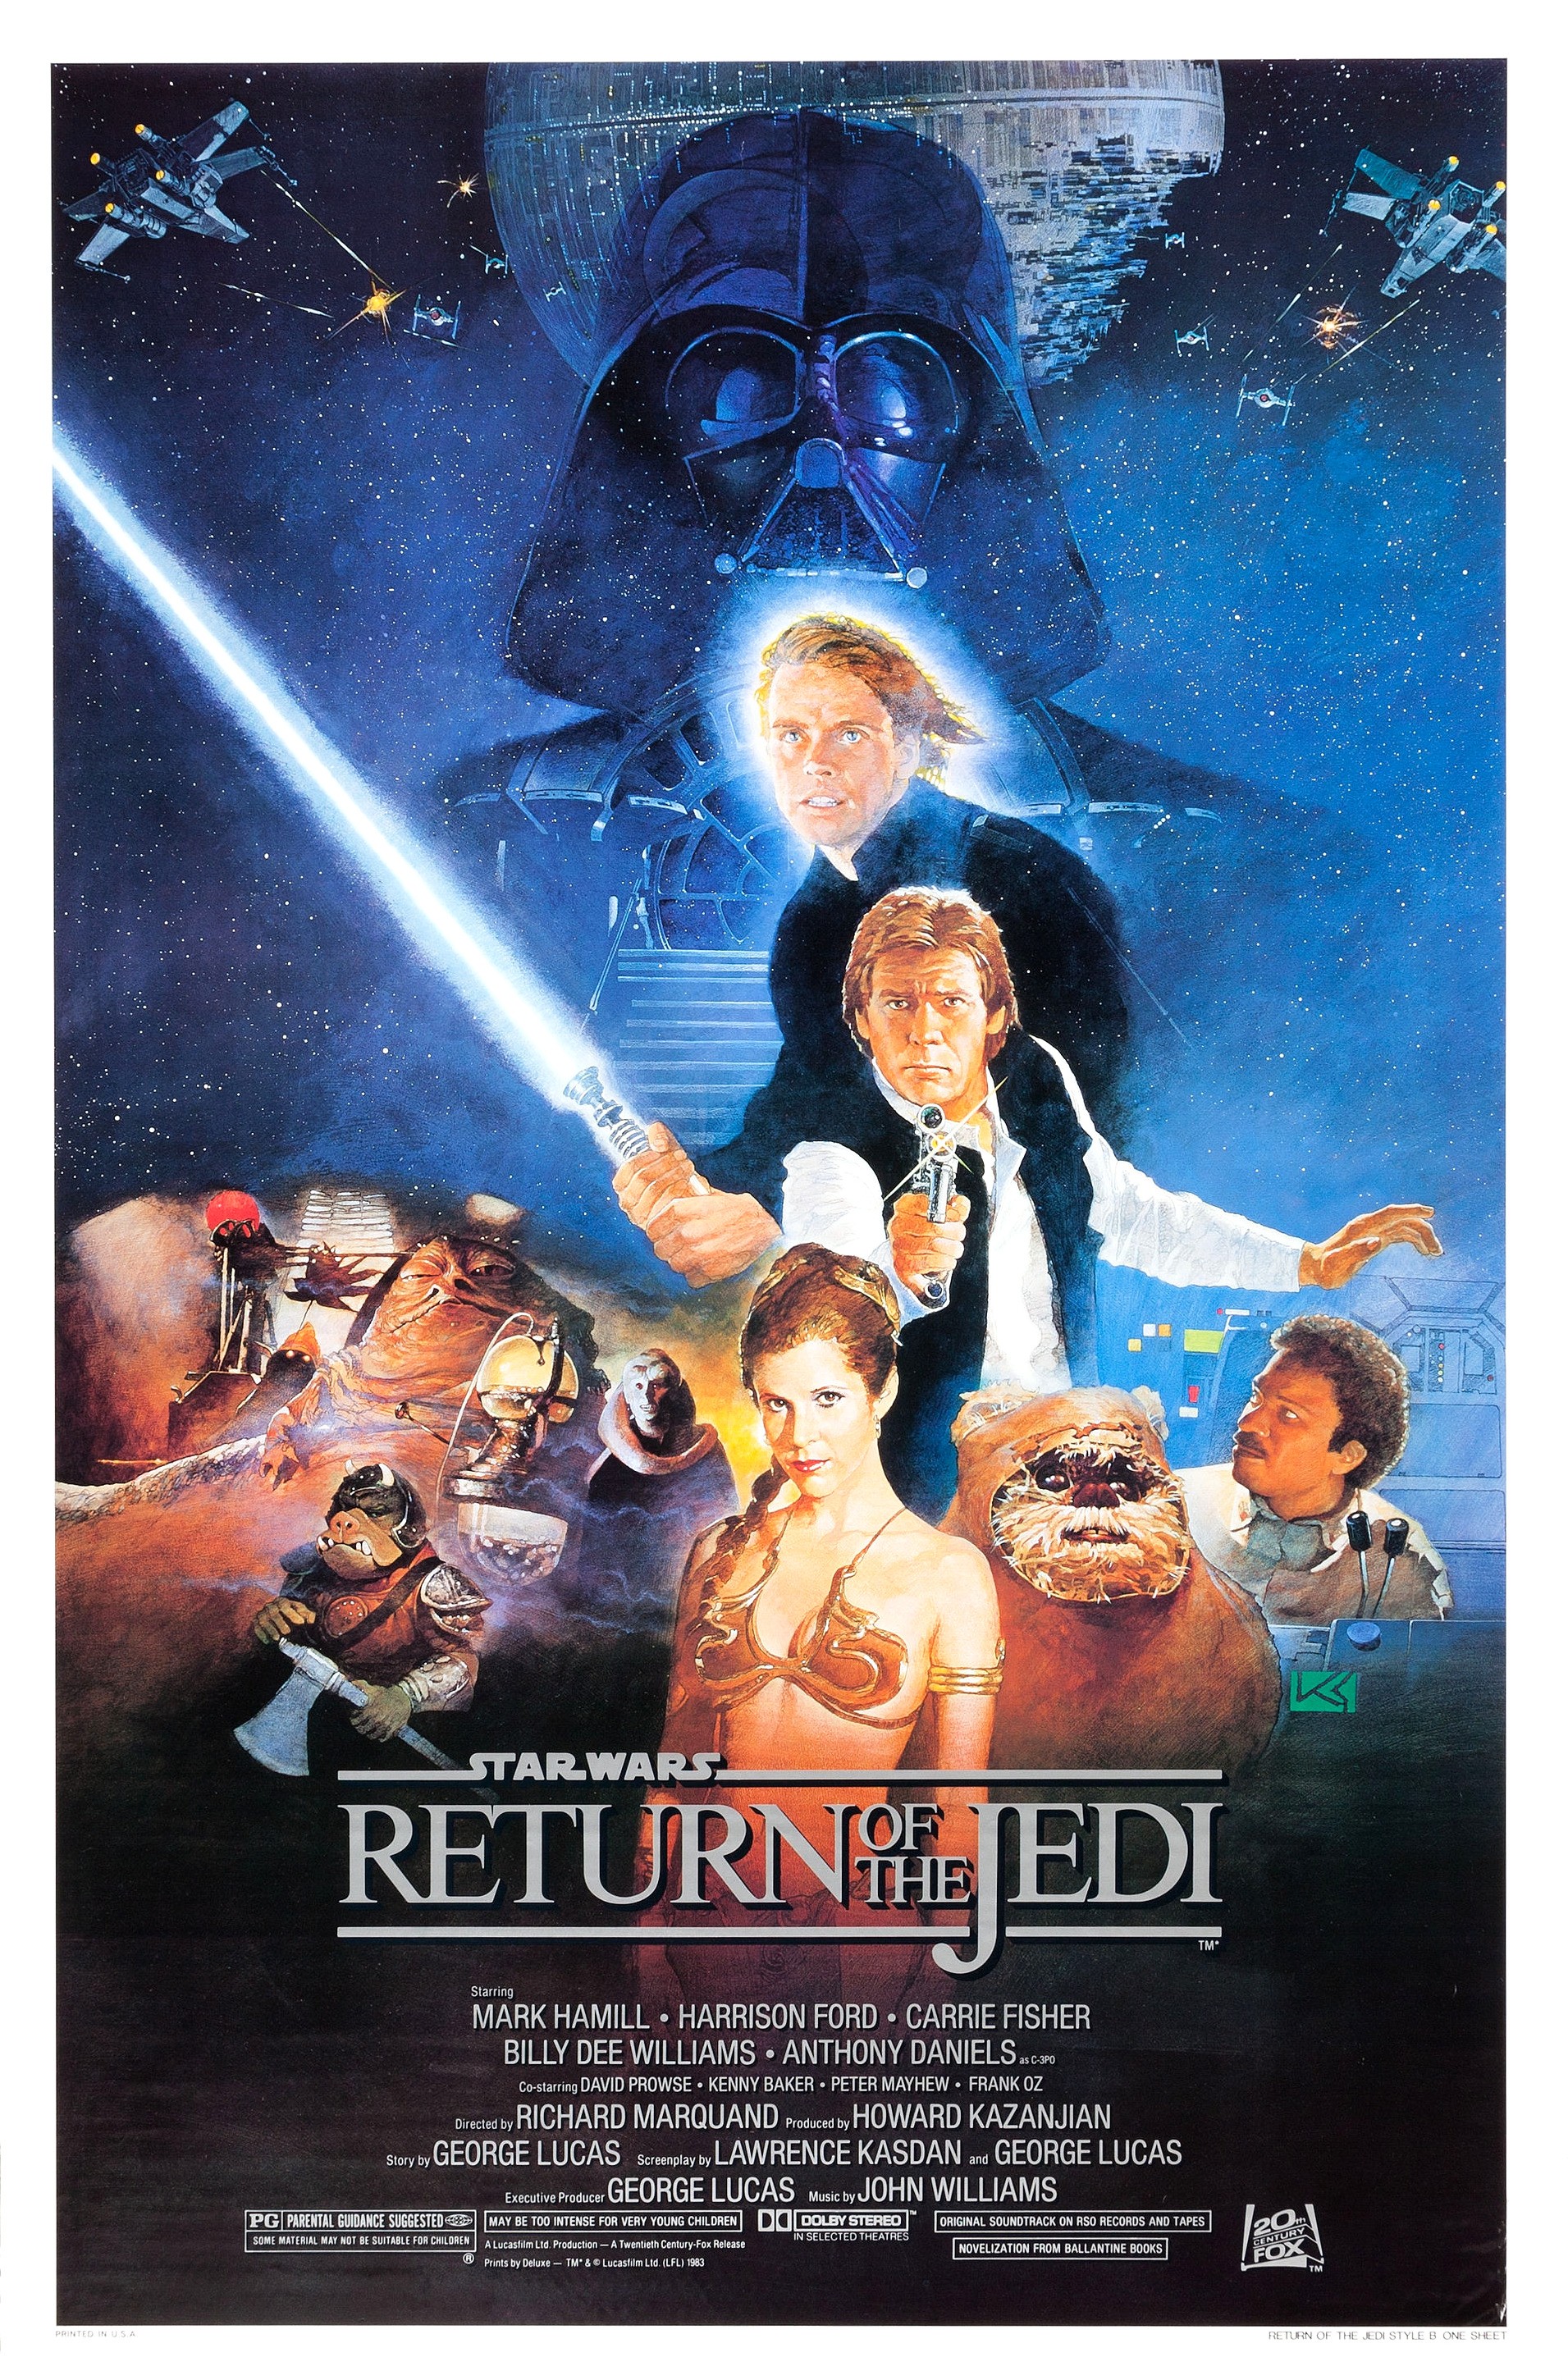 Star Wars Ep. VI: Return of the Jedi